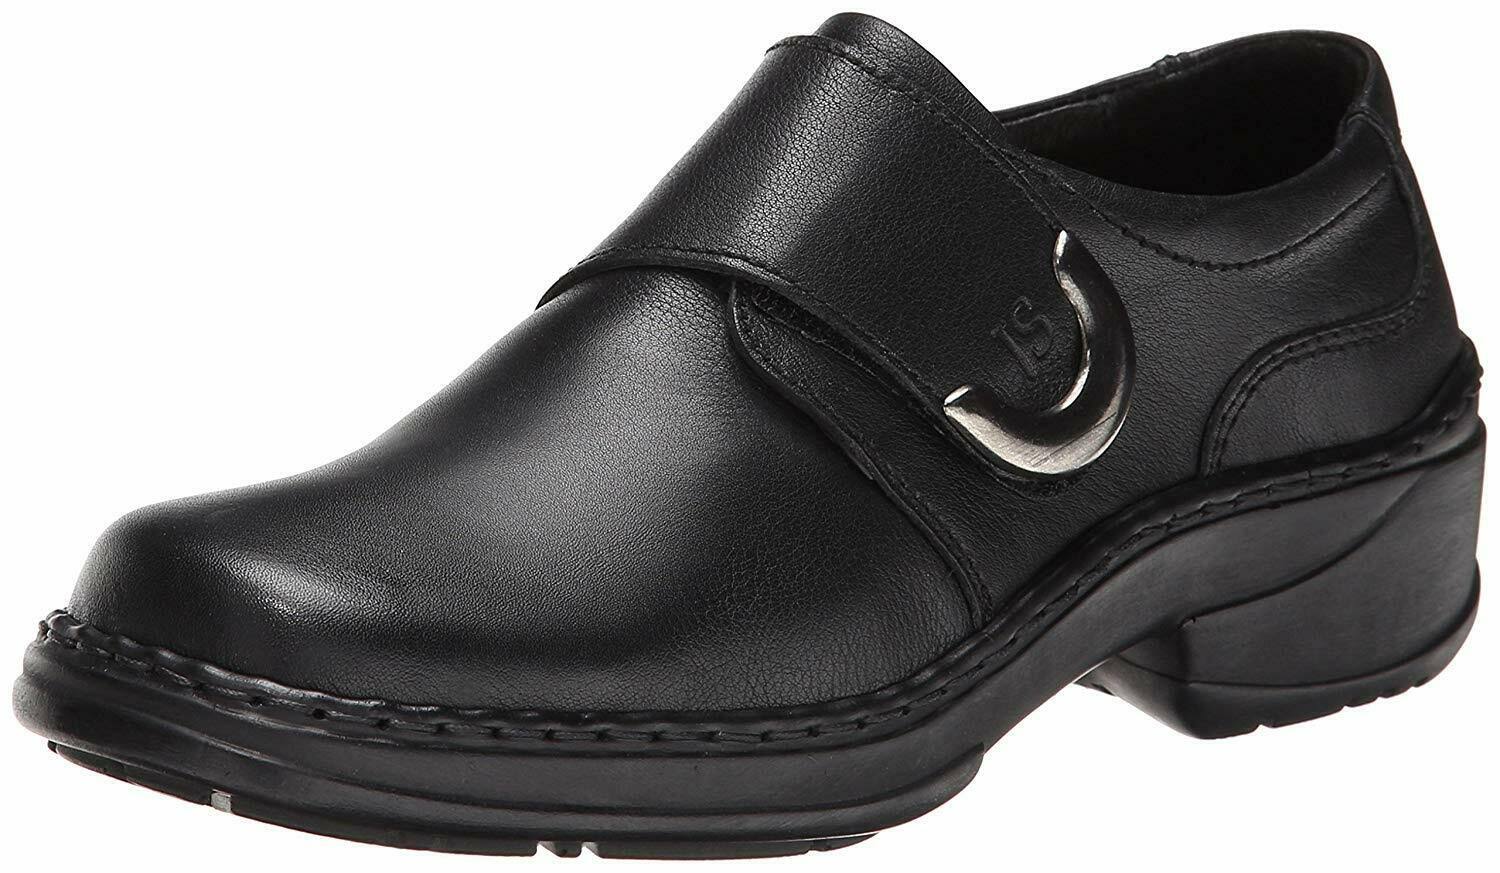 Josef Seibel Women's Theresa Oxford Shoes - Black Catania, 38 EU